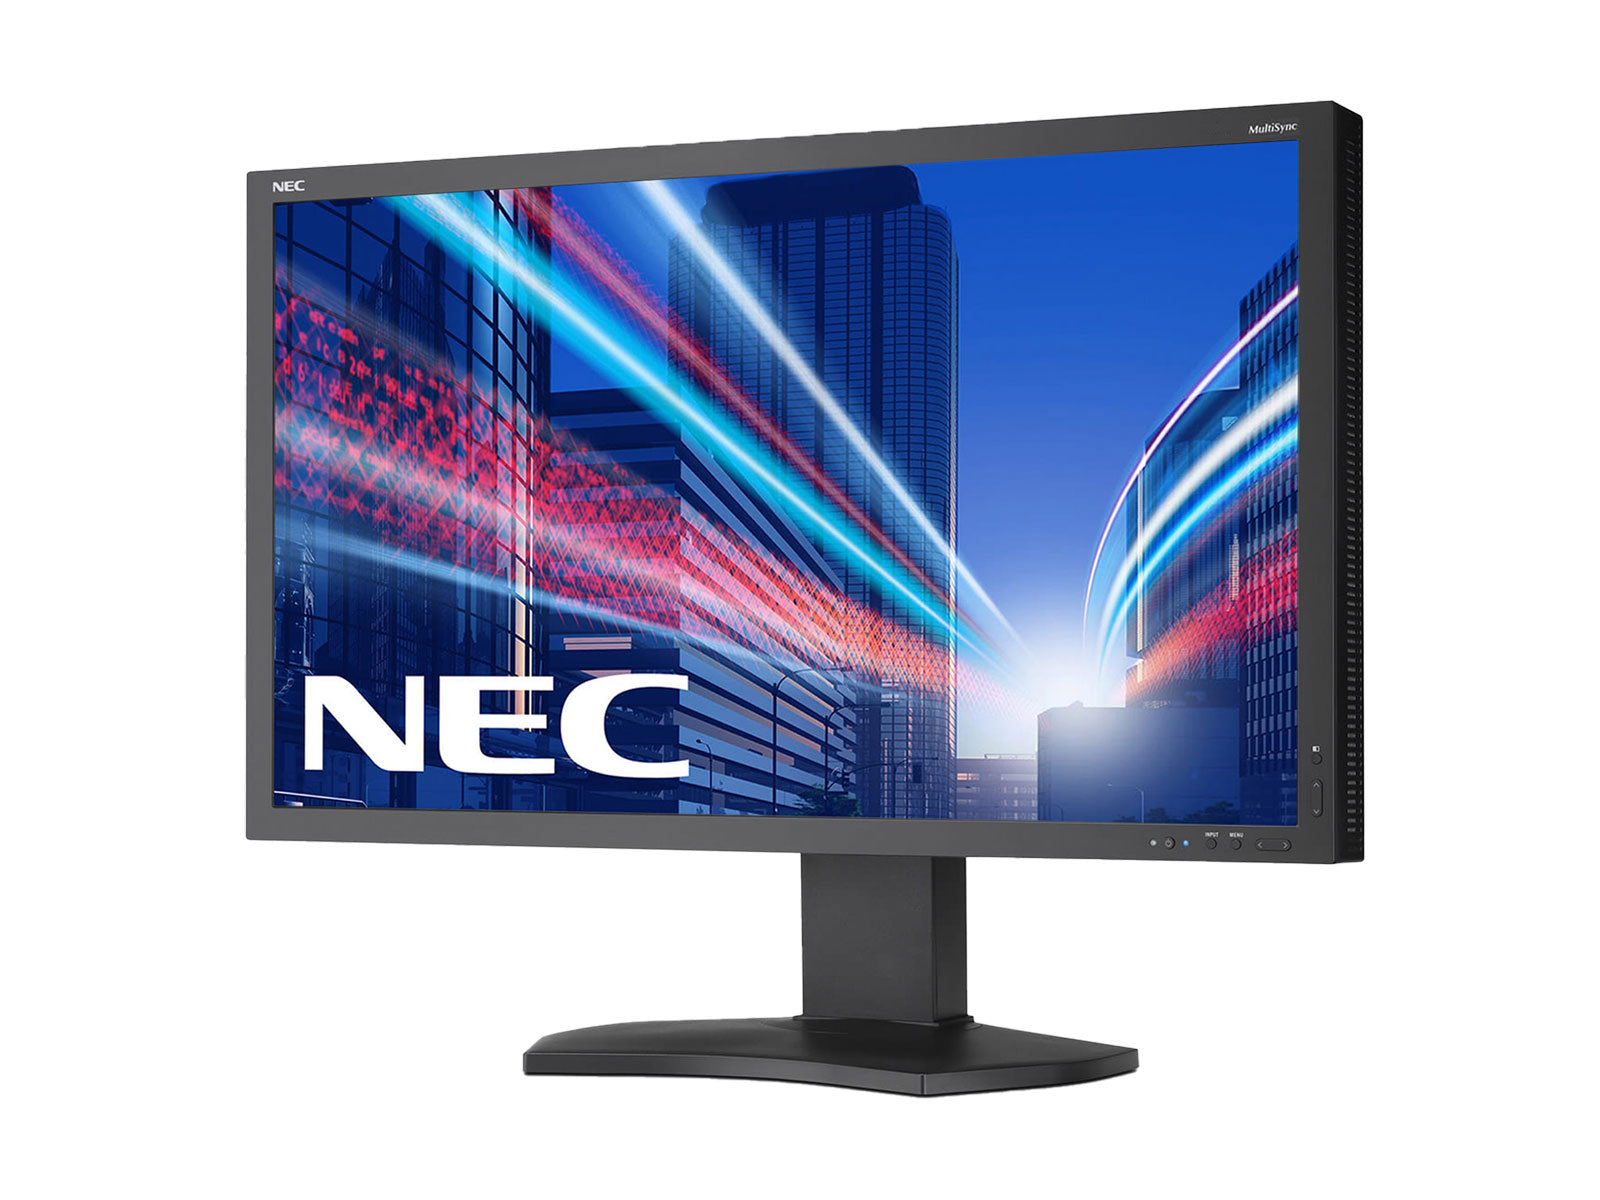 NEC MultiSync PA241W 24" WUXGA 1920 x 1200 Widescreen Professional Graphics Display Monitor (PA241W)